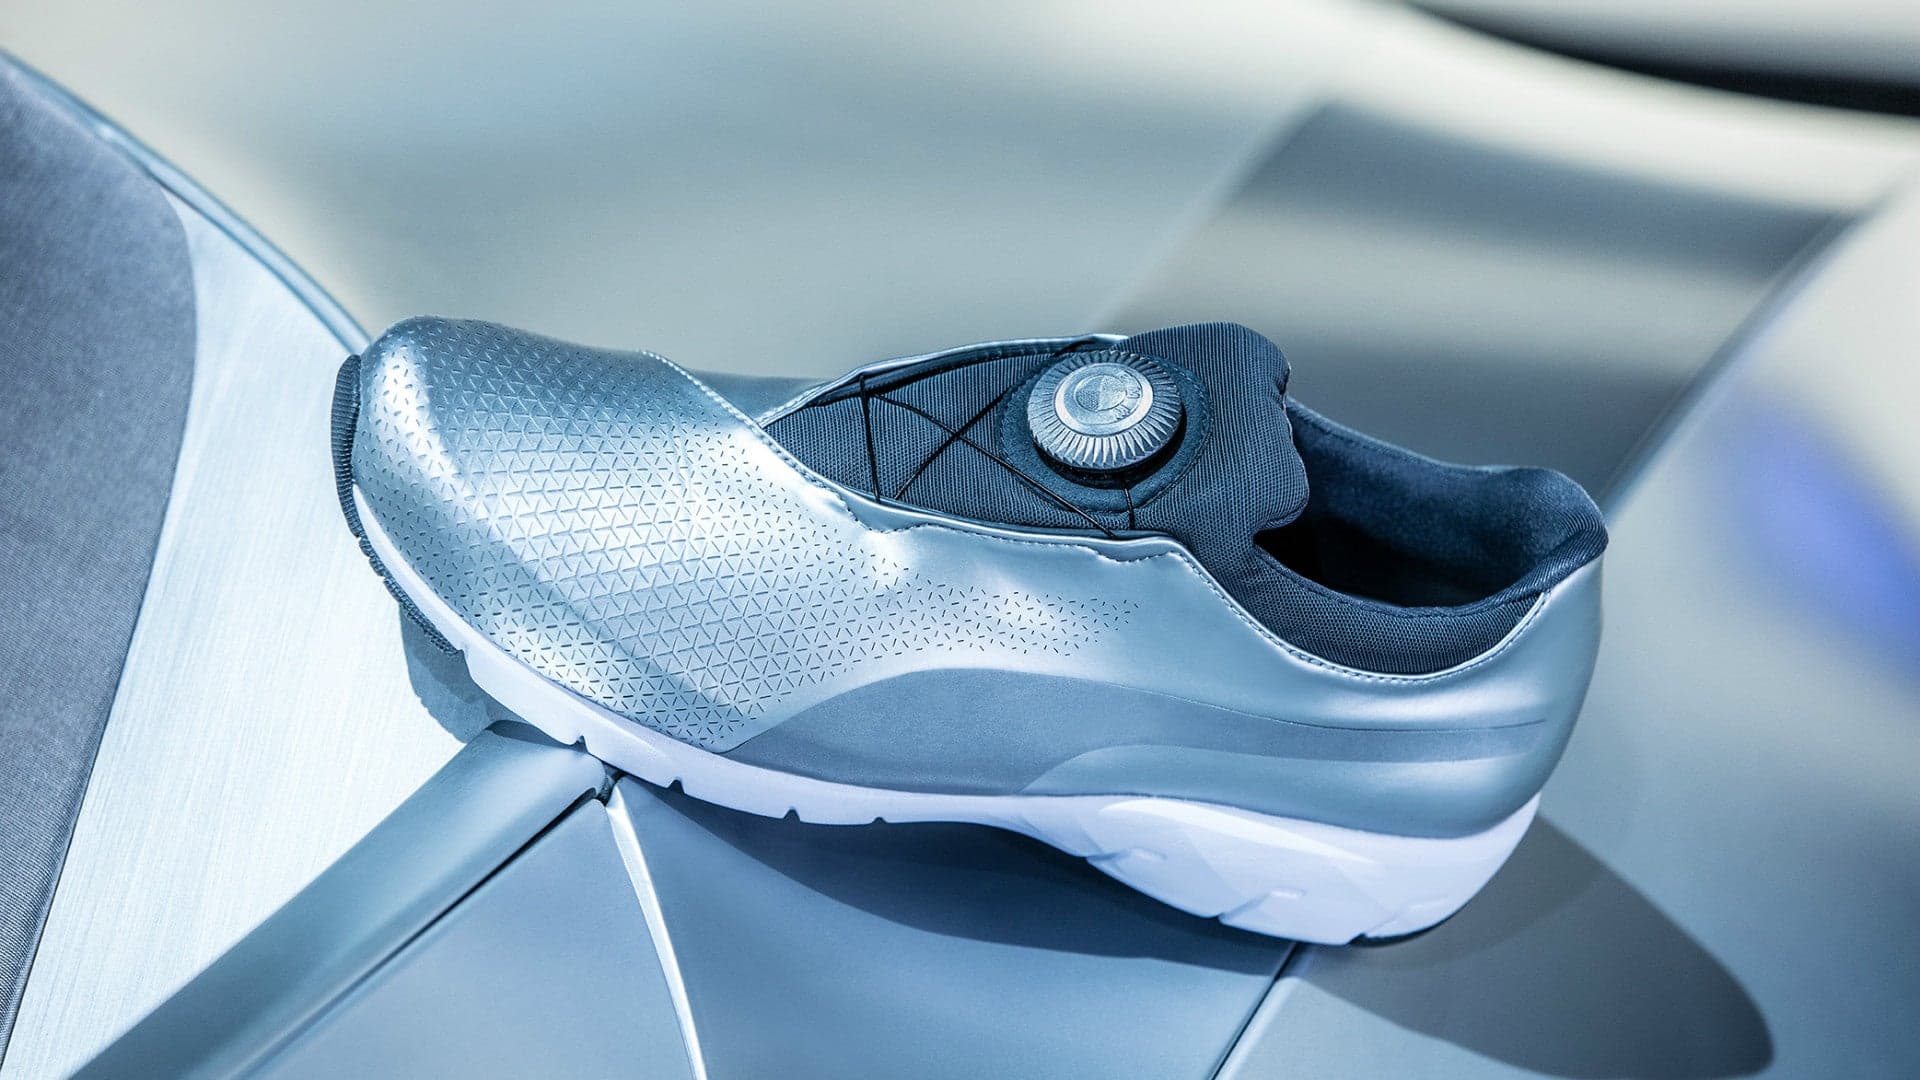 BMW’s Weirdest Concept Car Becomes a Puma Sneaker